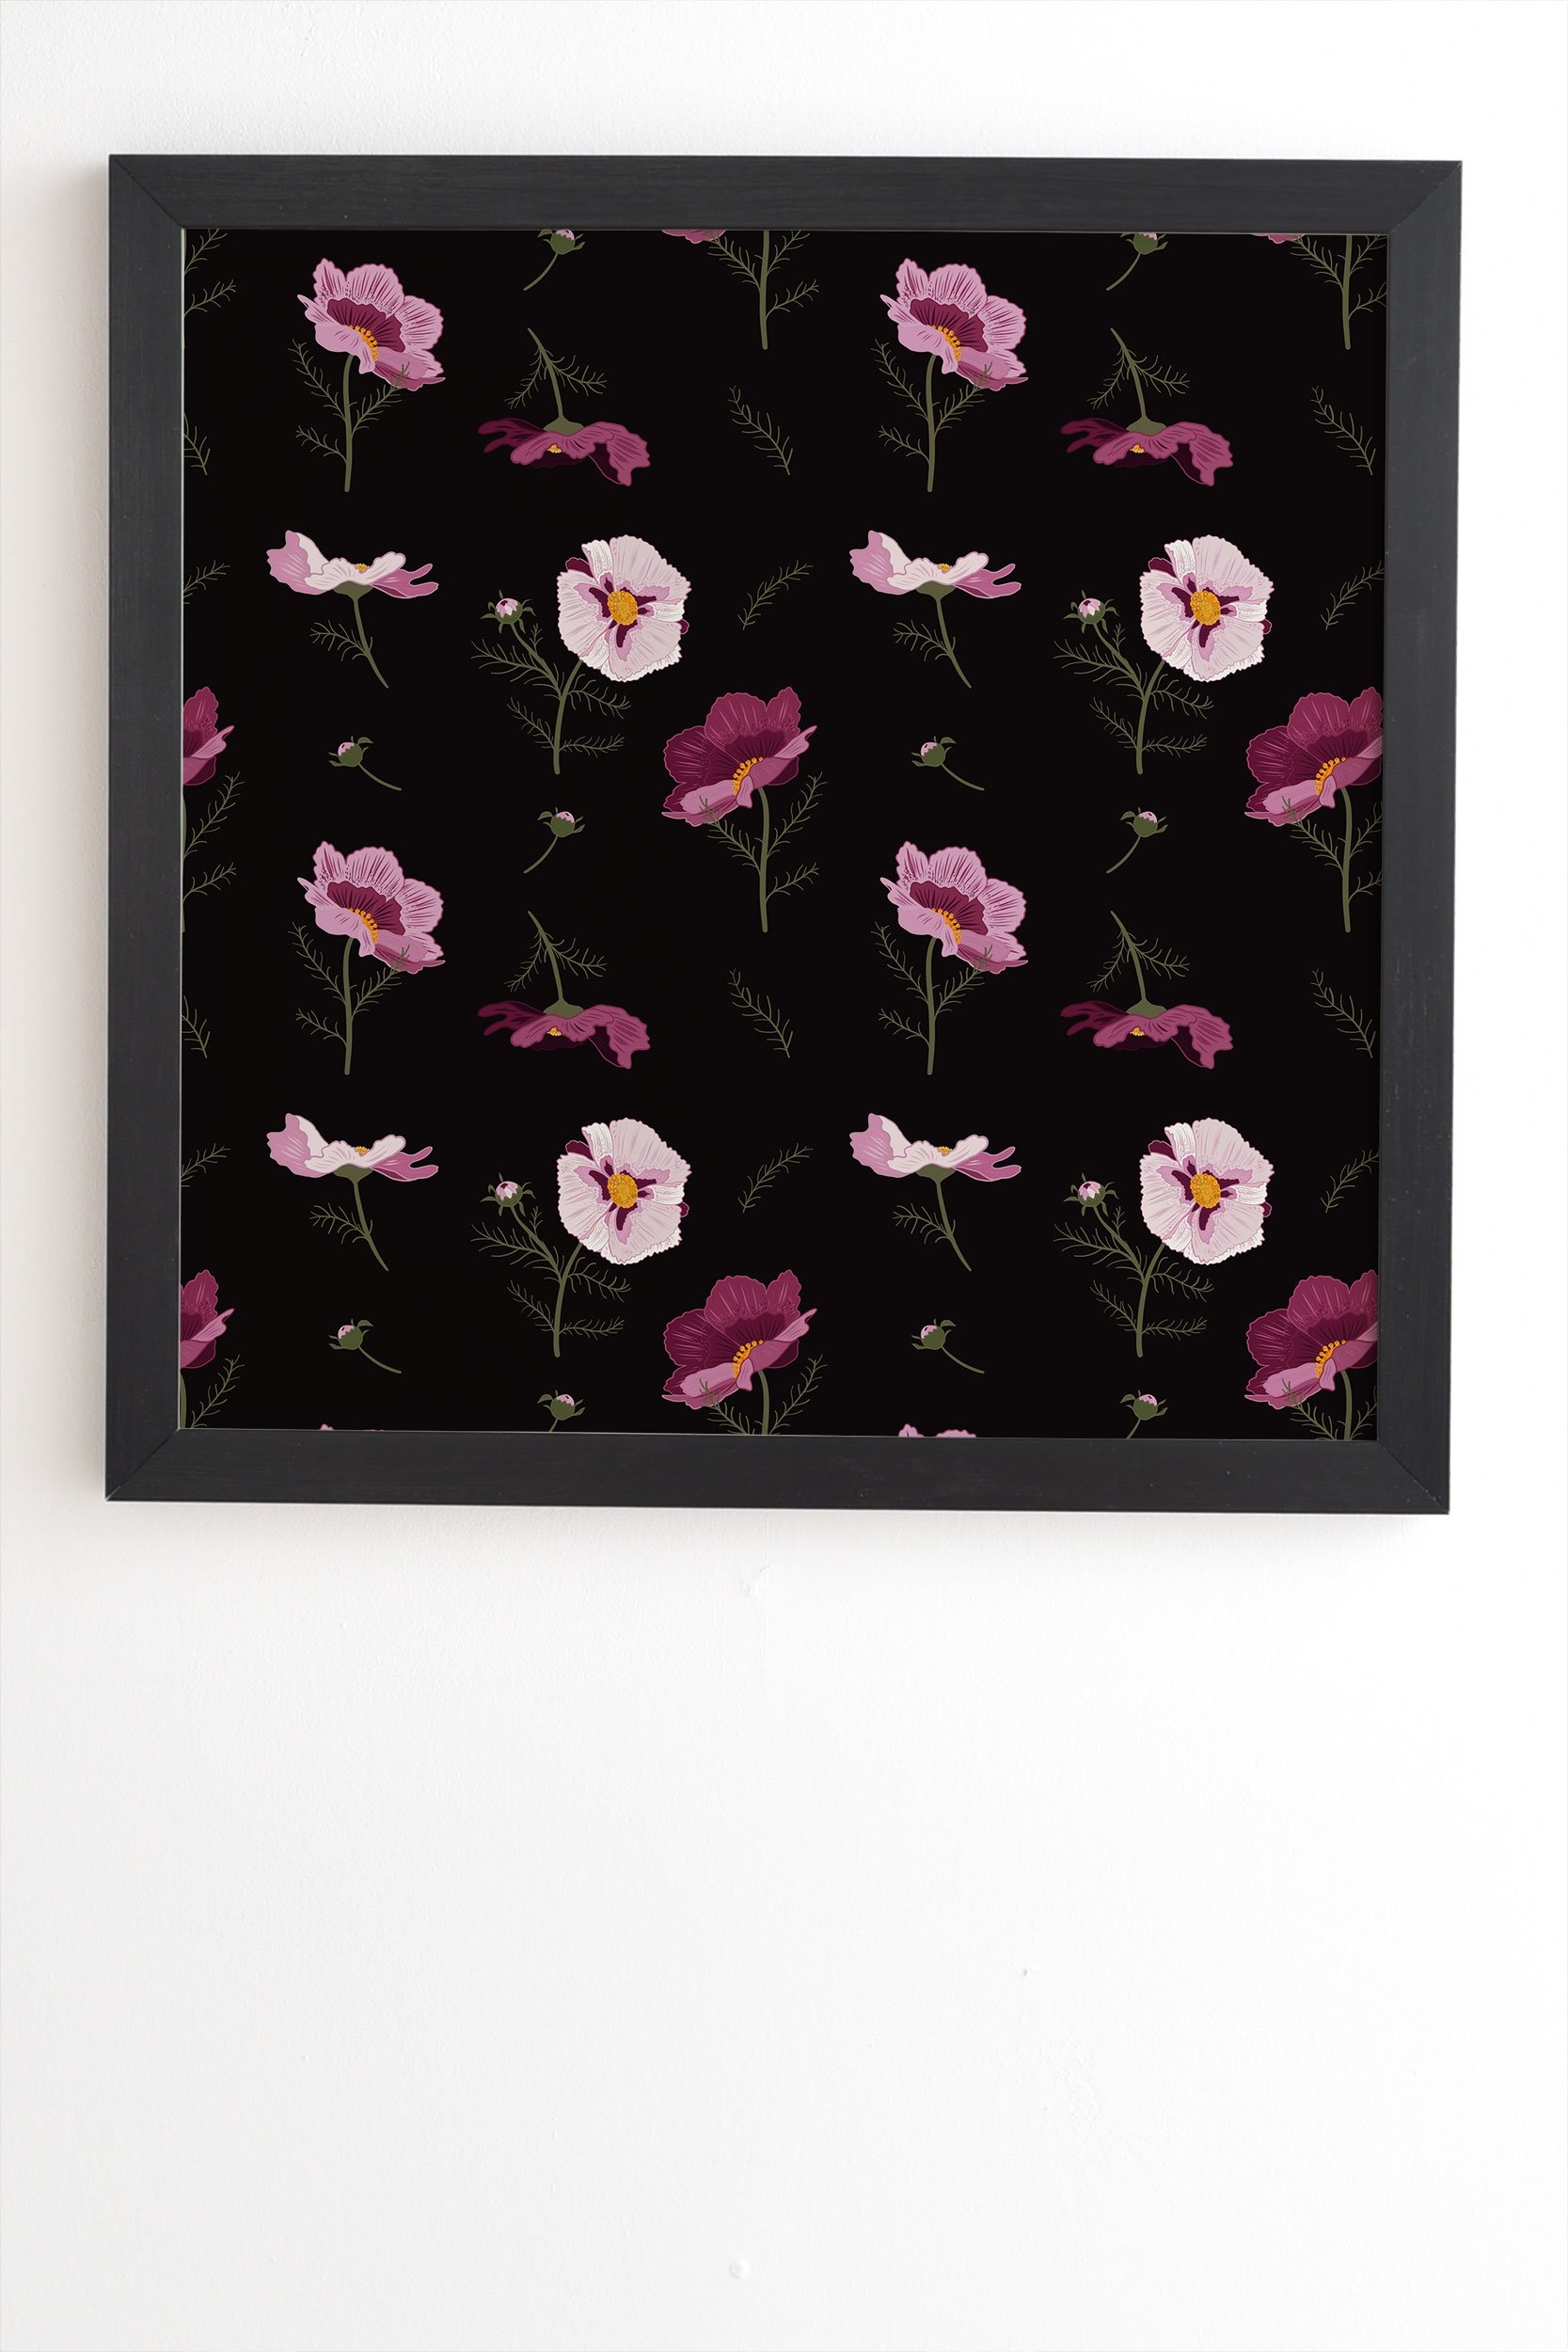 Iveta Abolina Florrie Night Black Framed Wall Art - 8" x 9.5" - Image 1